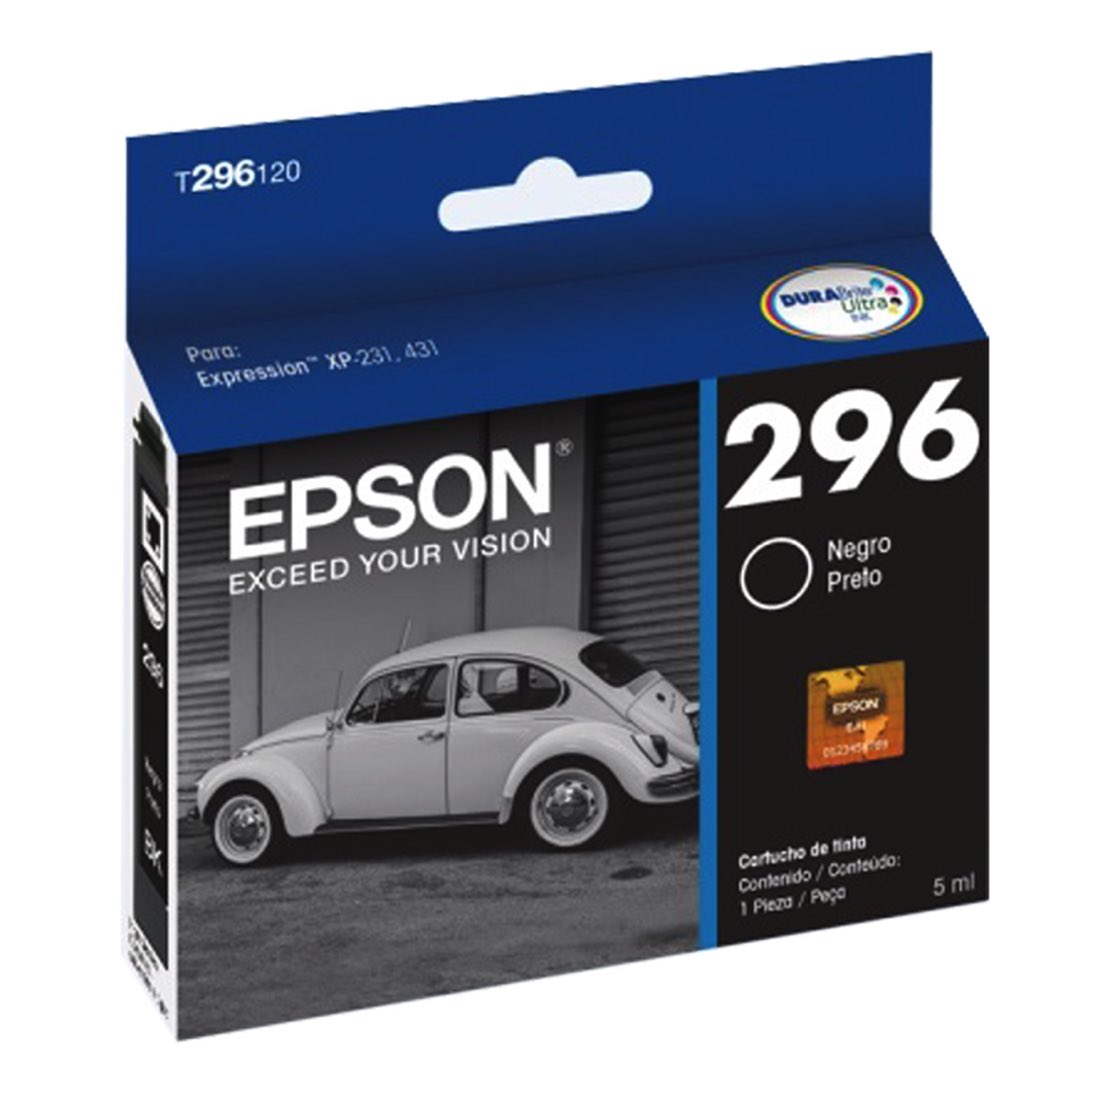 Epson T296120 cartucho de tinta Original Negro